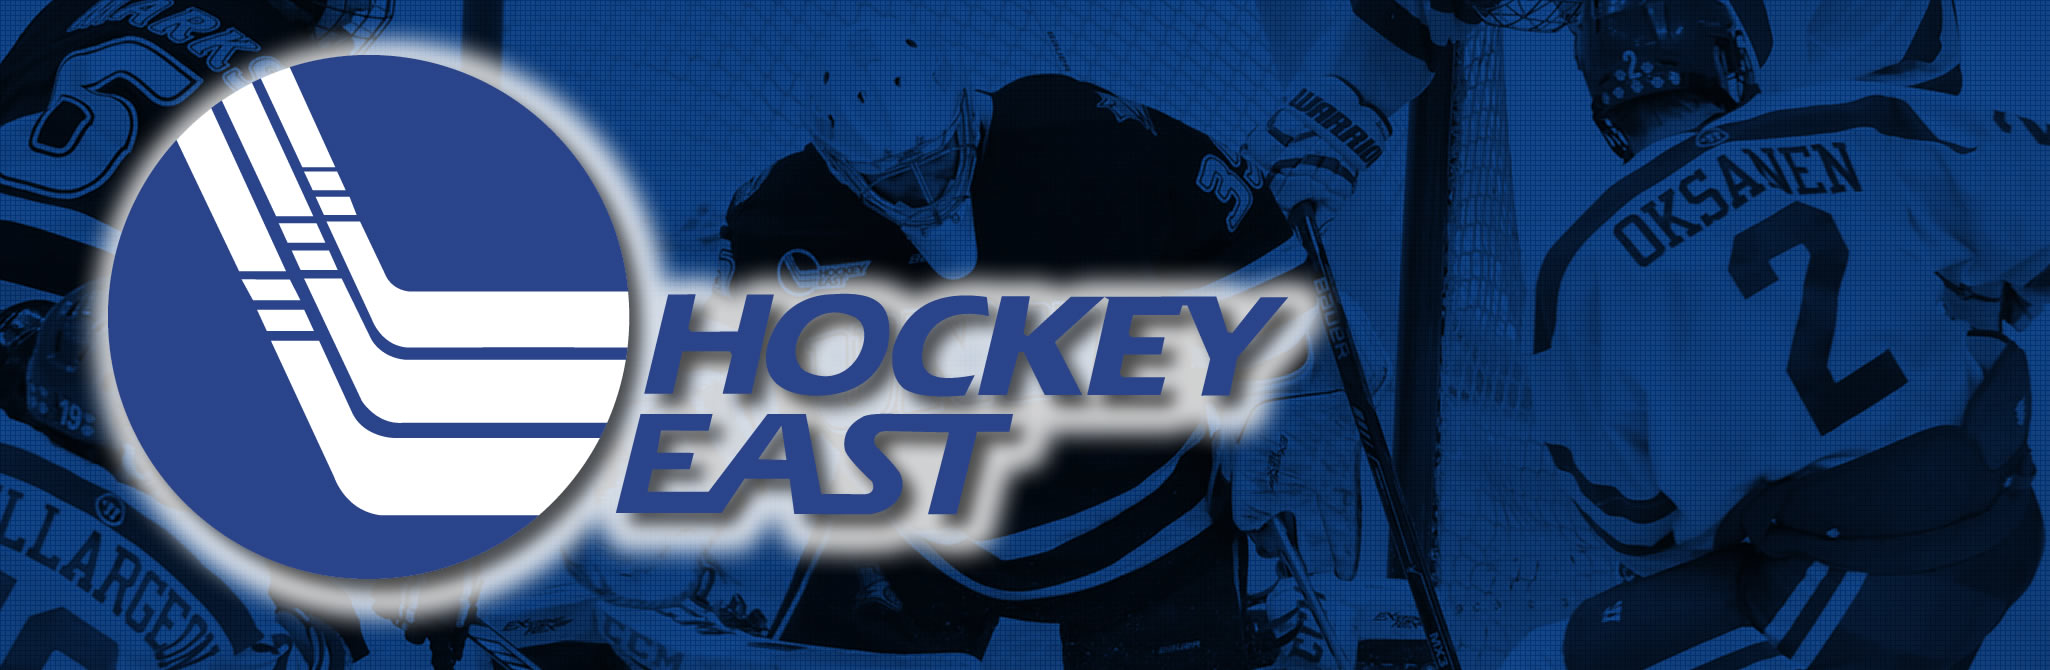 Hockey East Men's History and Records - Hockey East Association